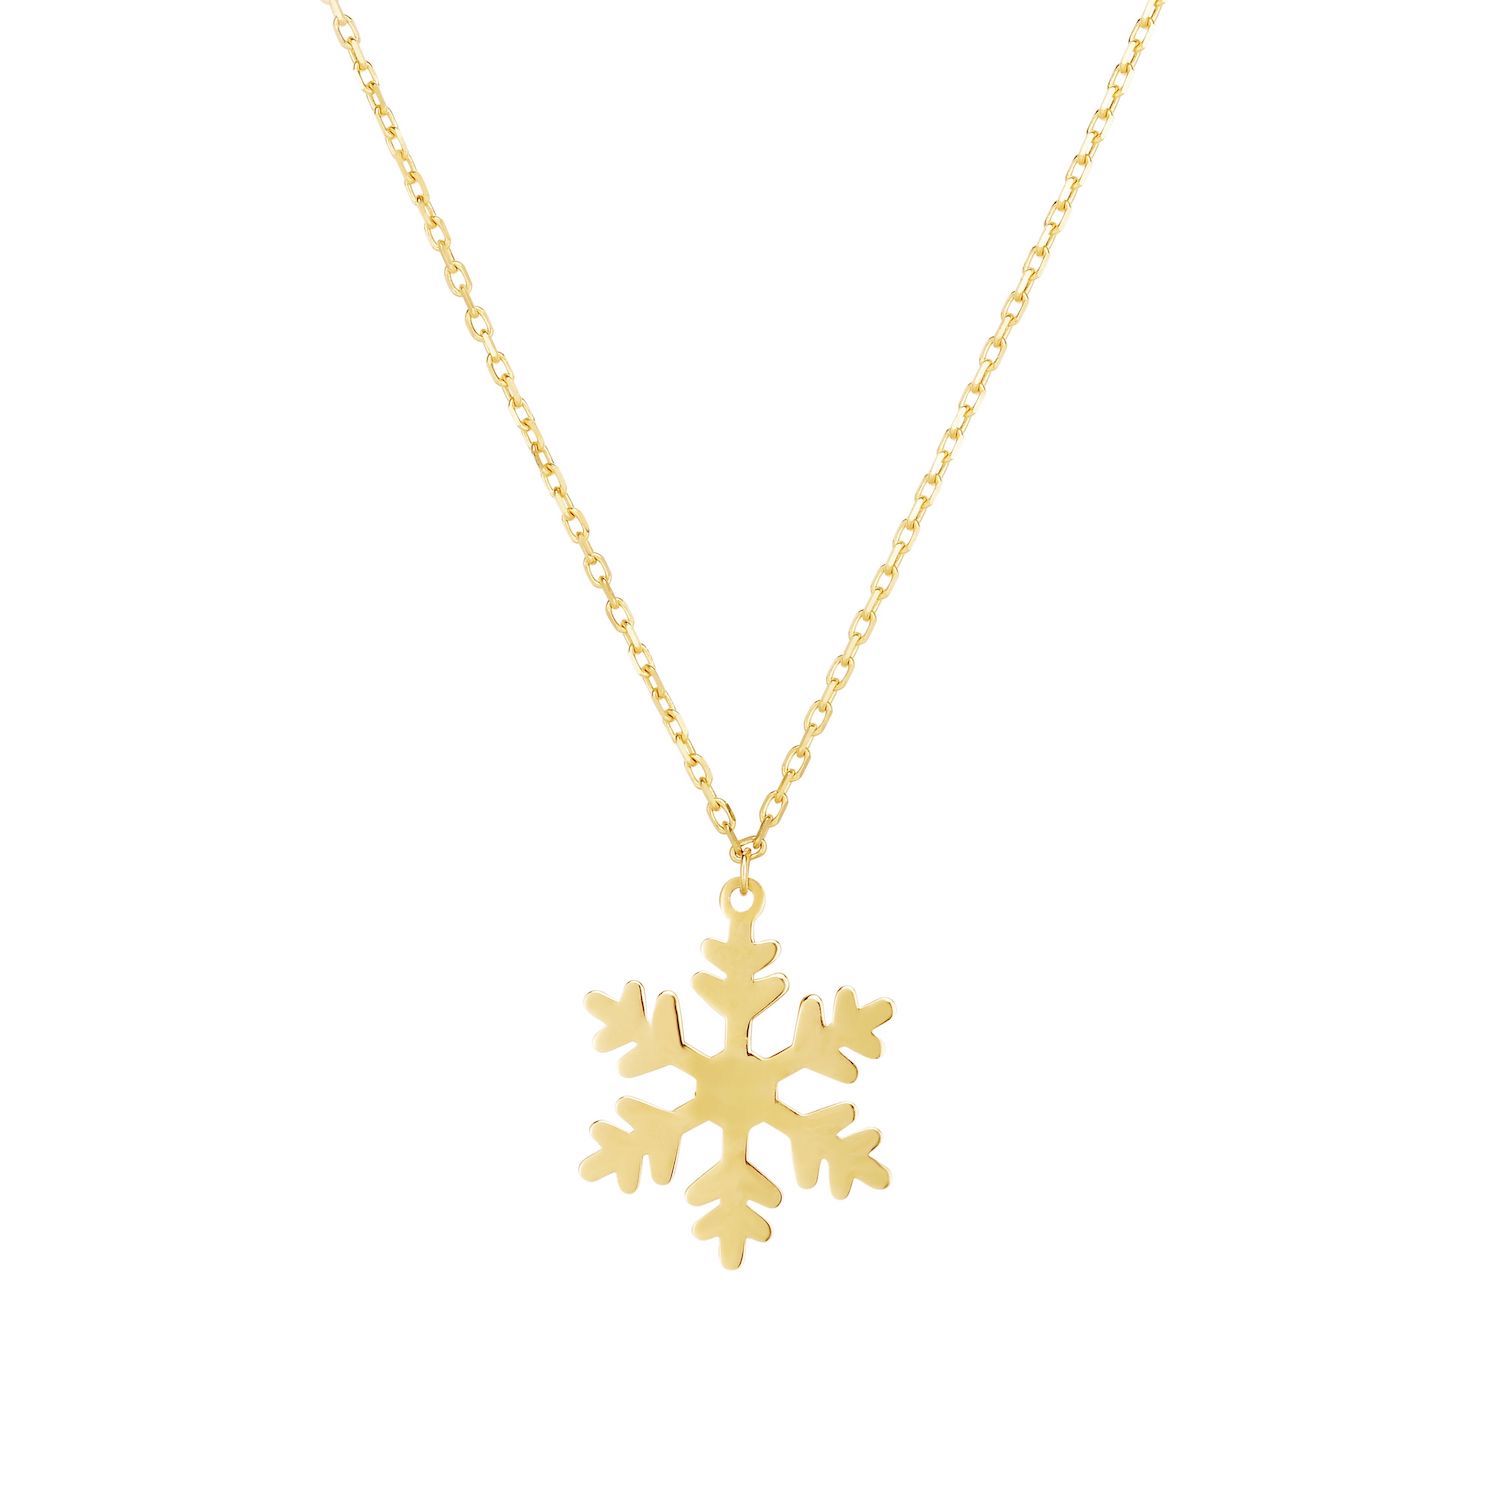 14K Yellow Gold Snowflake Pendant Necklace 14"-18" Adjustable